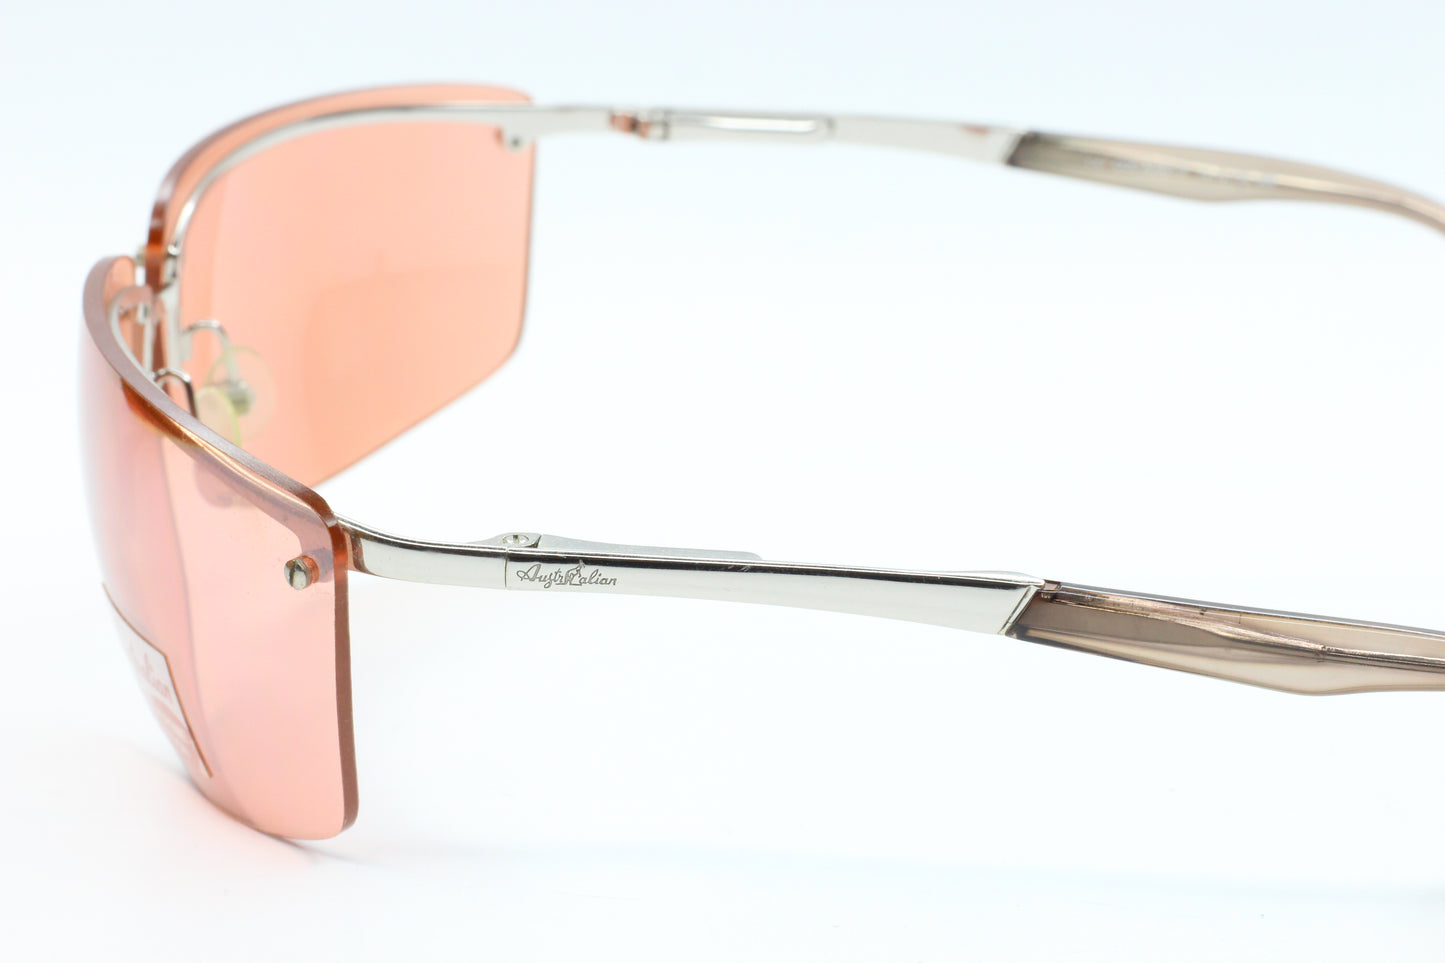 Australian AU401-3 Silver Rimless Gradient Brown Italy Sunglasses